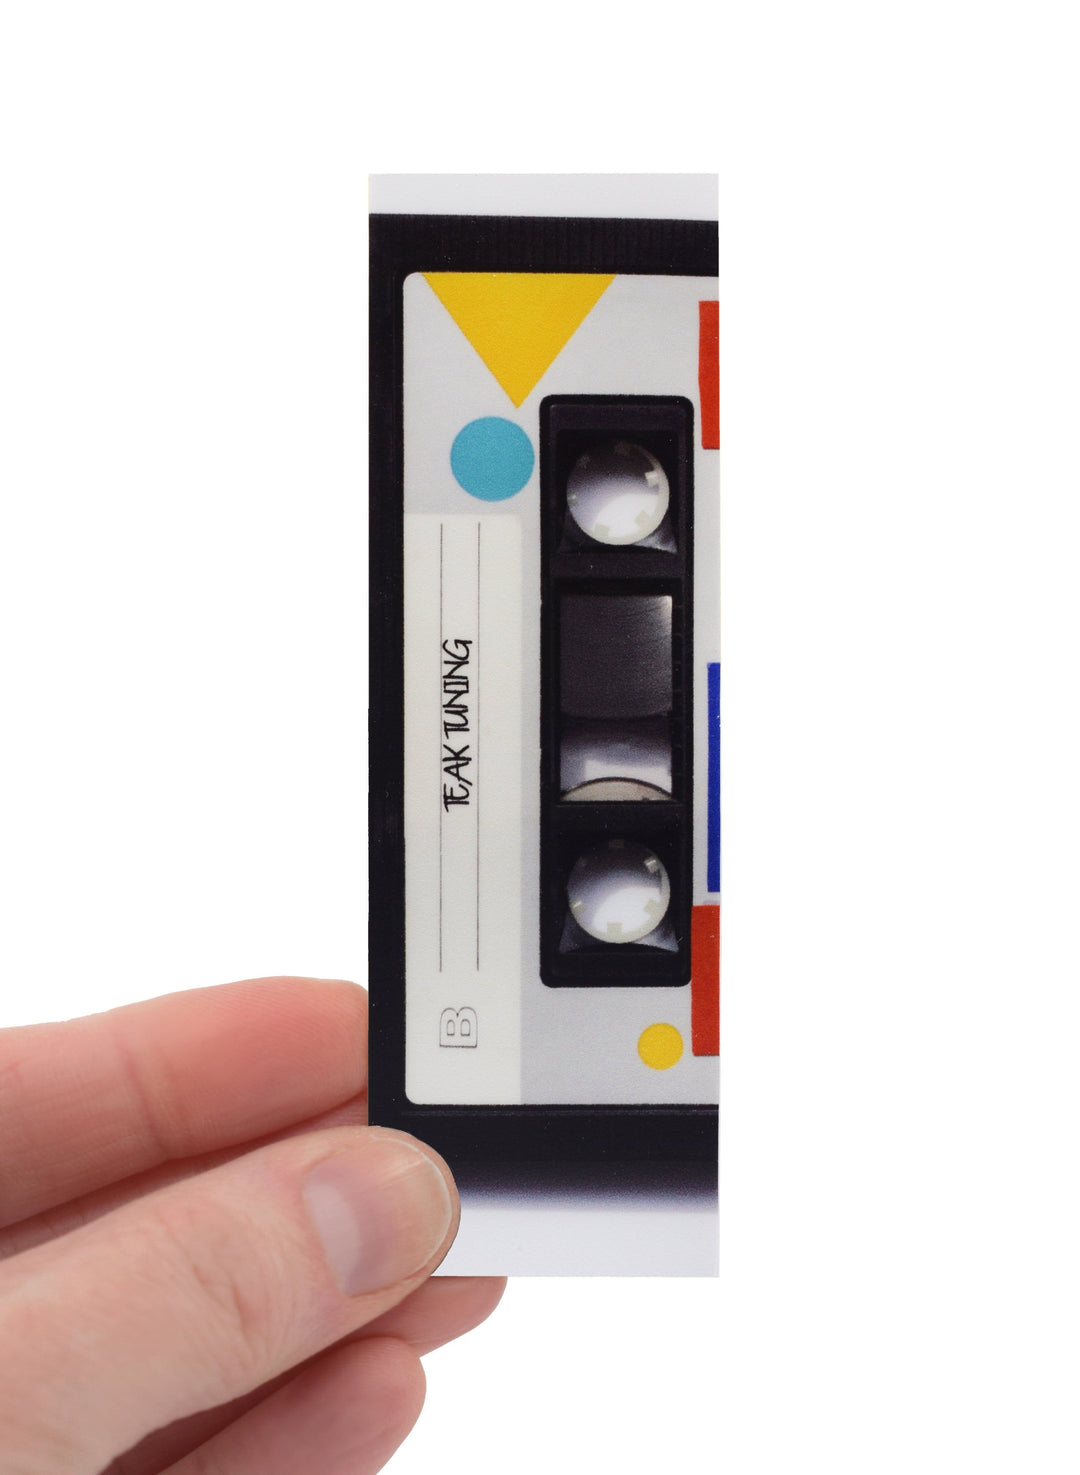 Teak Tuning "Cassette Tape" Deck Graphic Wrap - 35mm x 110mm